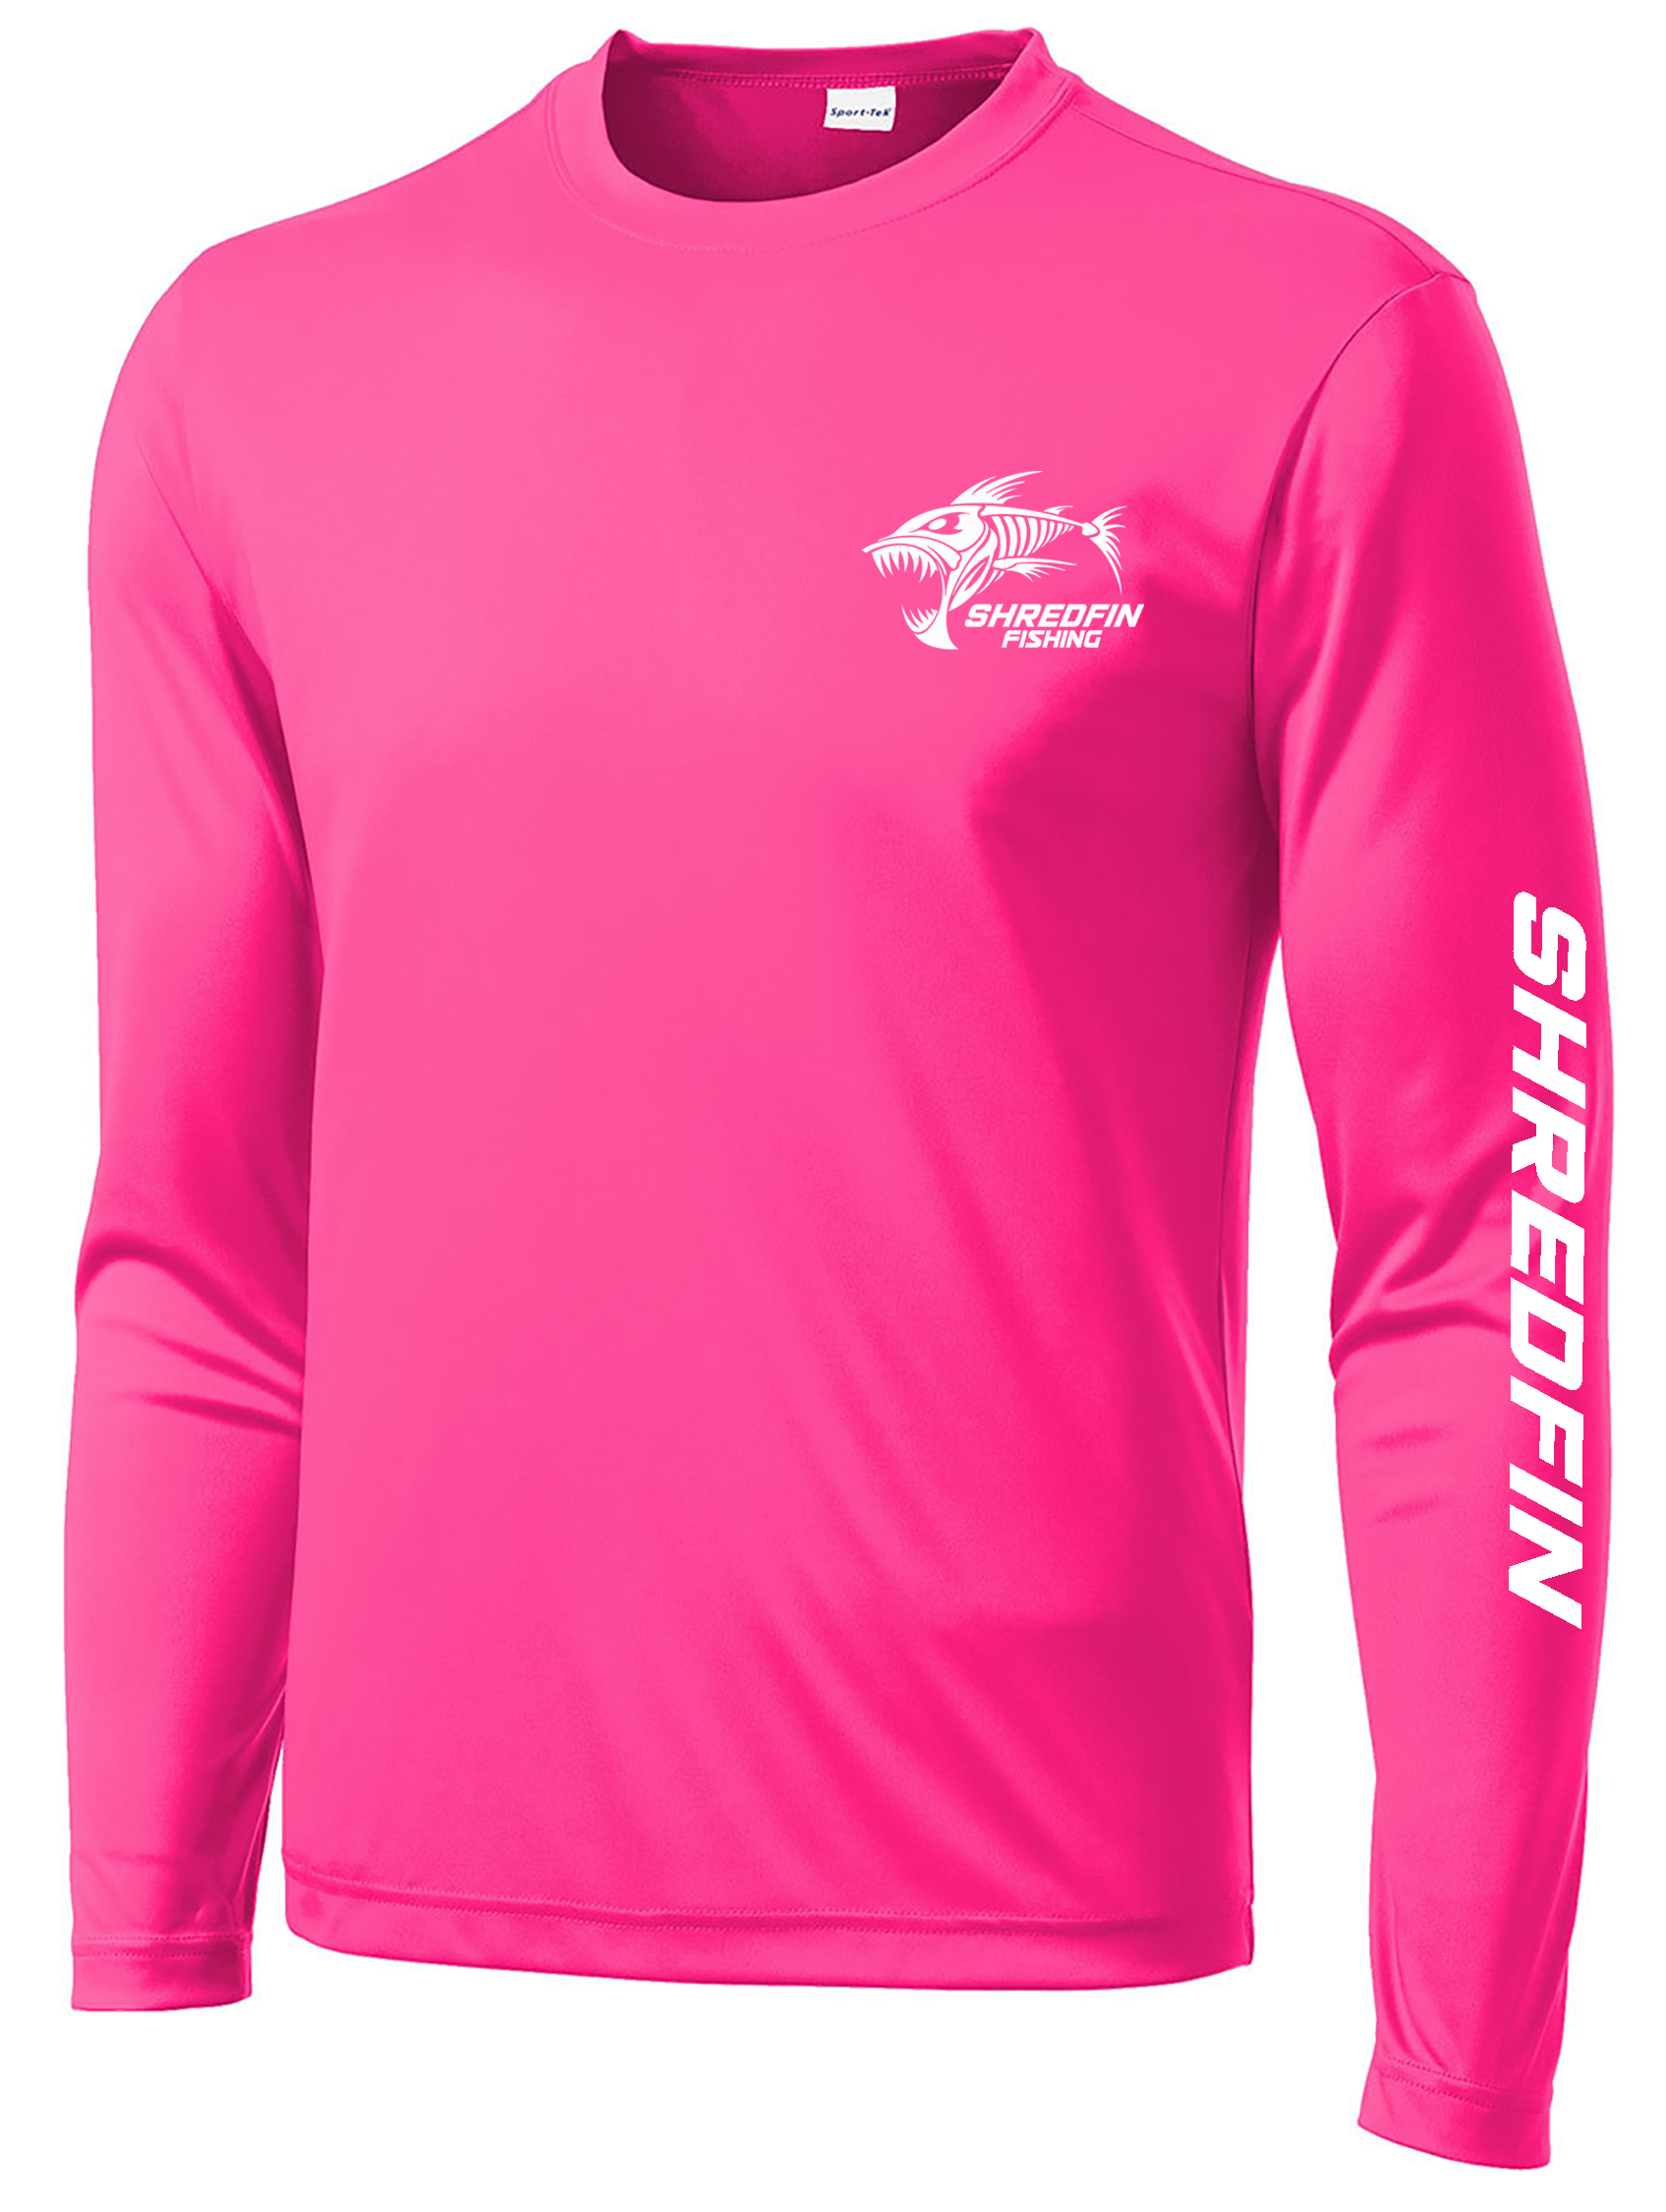 ShredFin Neon Pink Long Sleeve Performance Shirt Medium